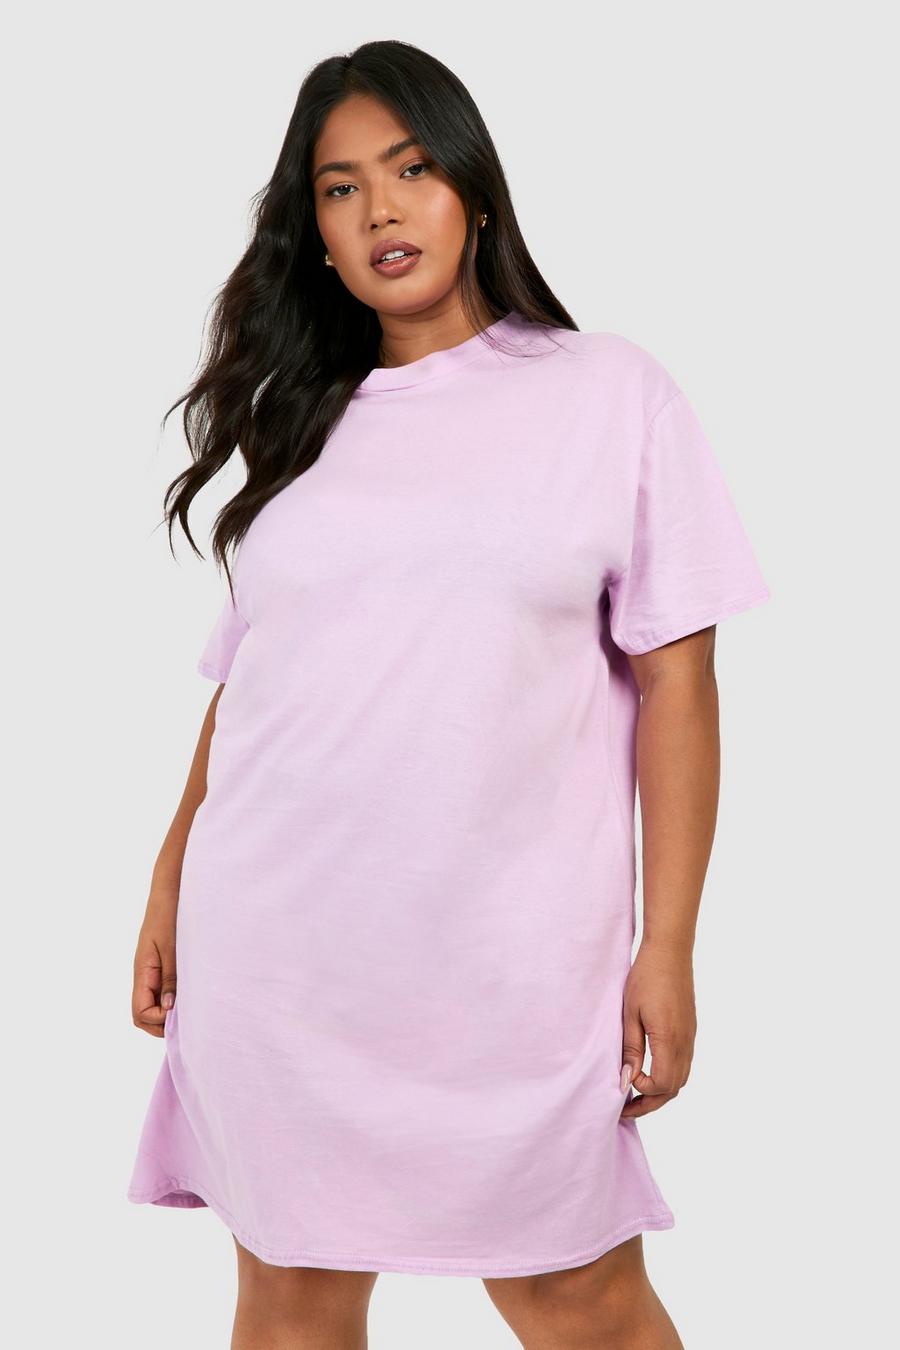 Women's T-Shirt dresses, oversized T-Shirt dresses